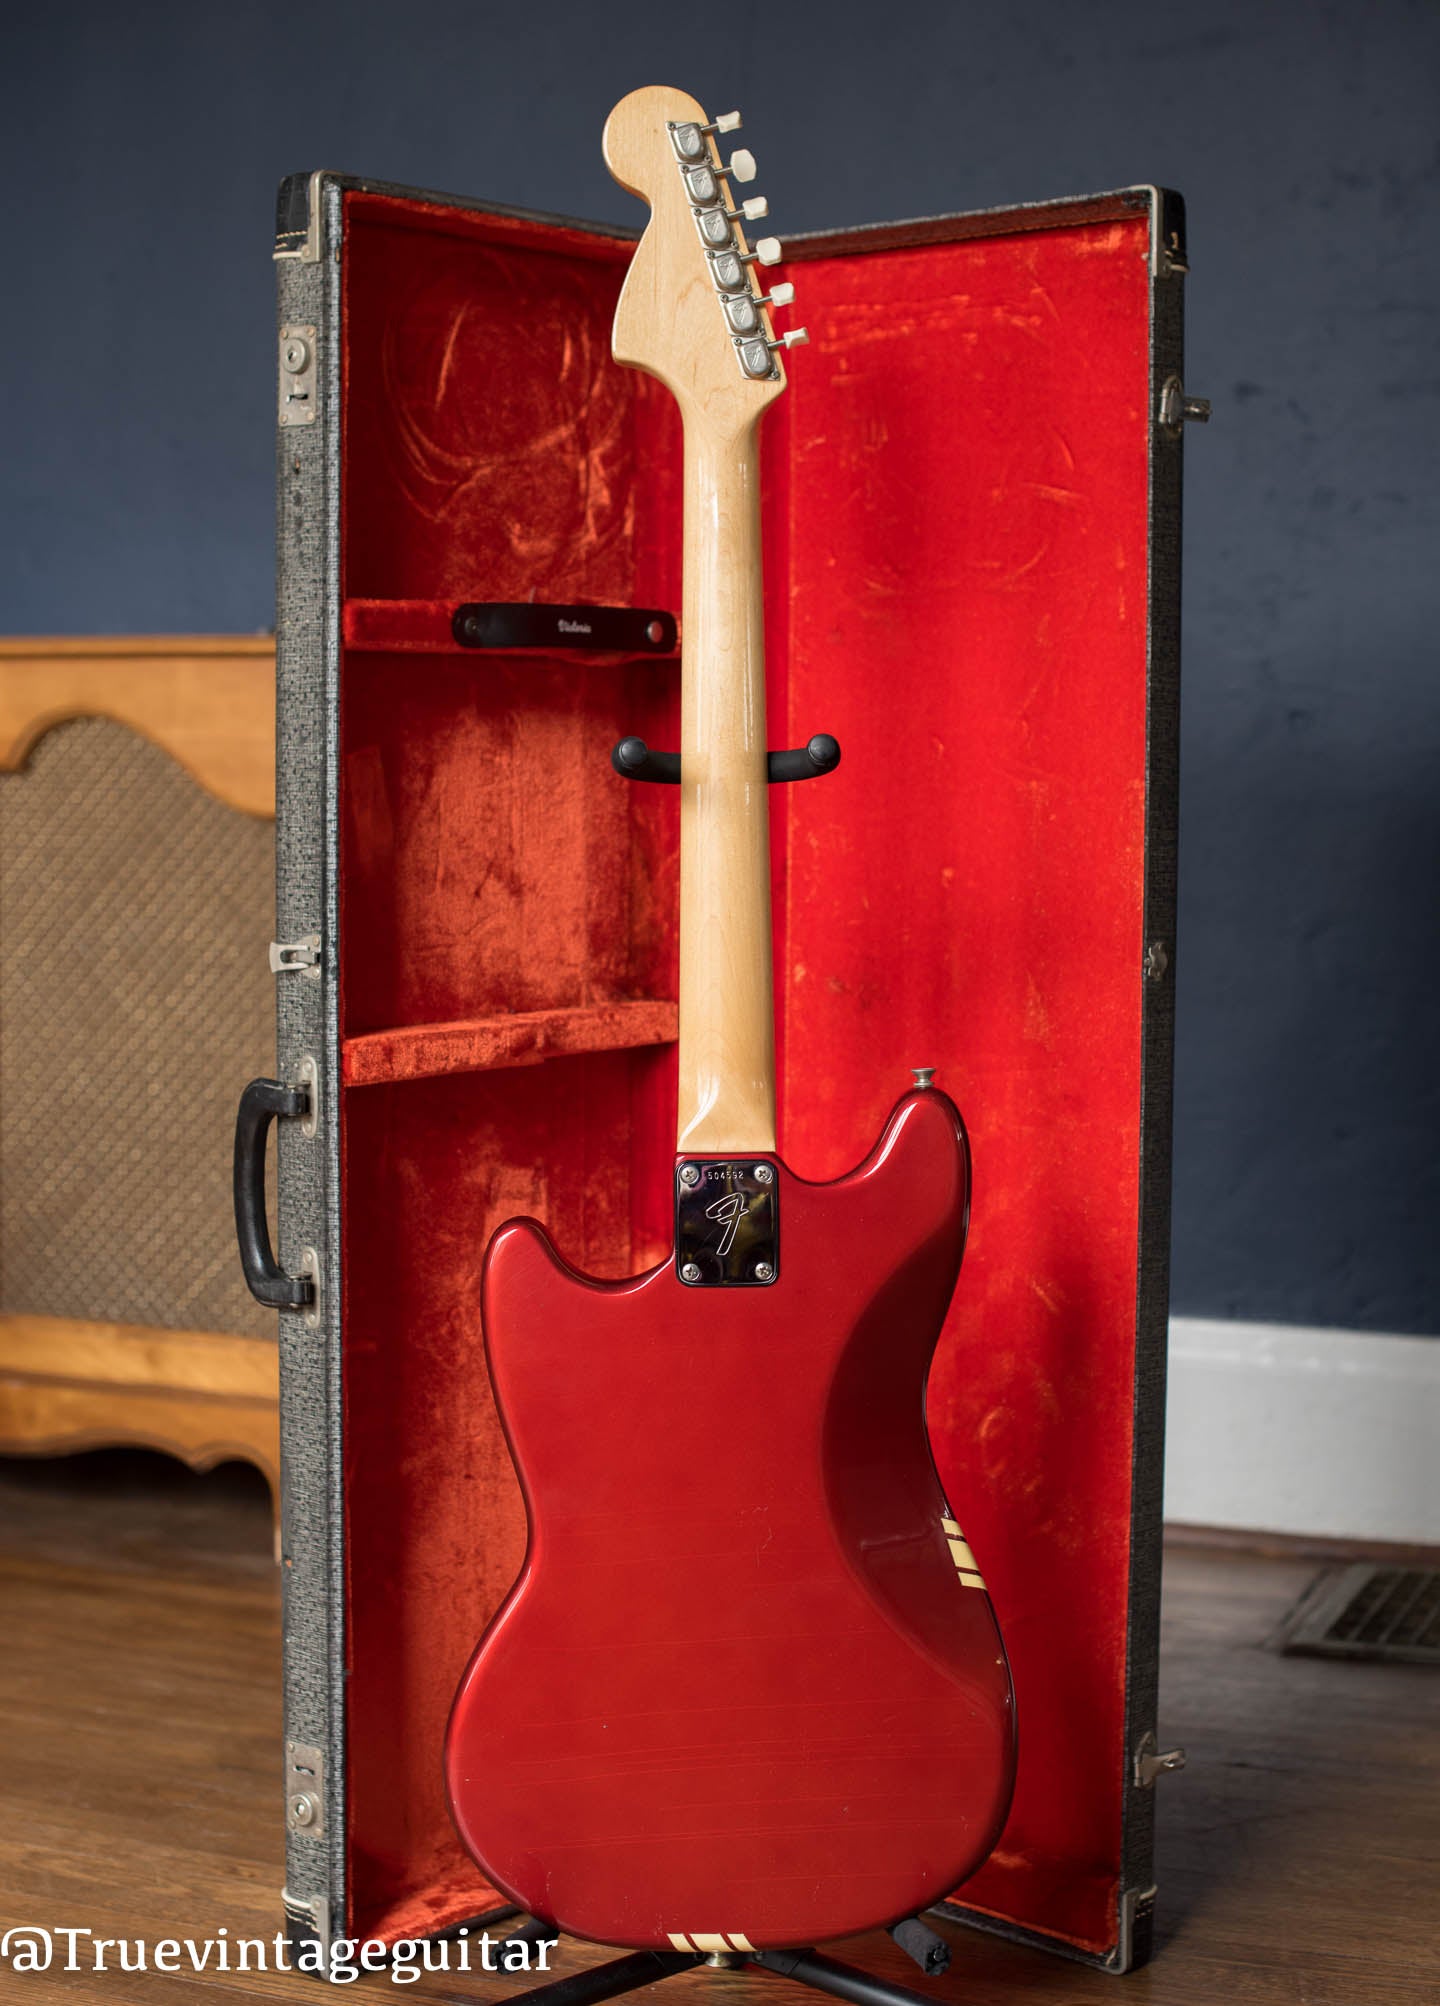 Fender Mustang vintage guitar Red 1970s